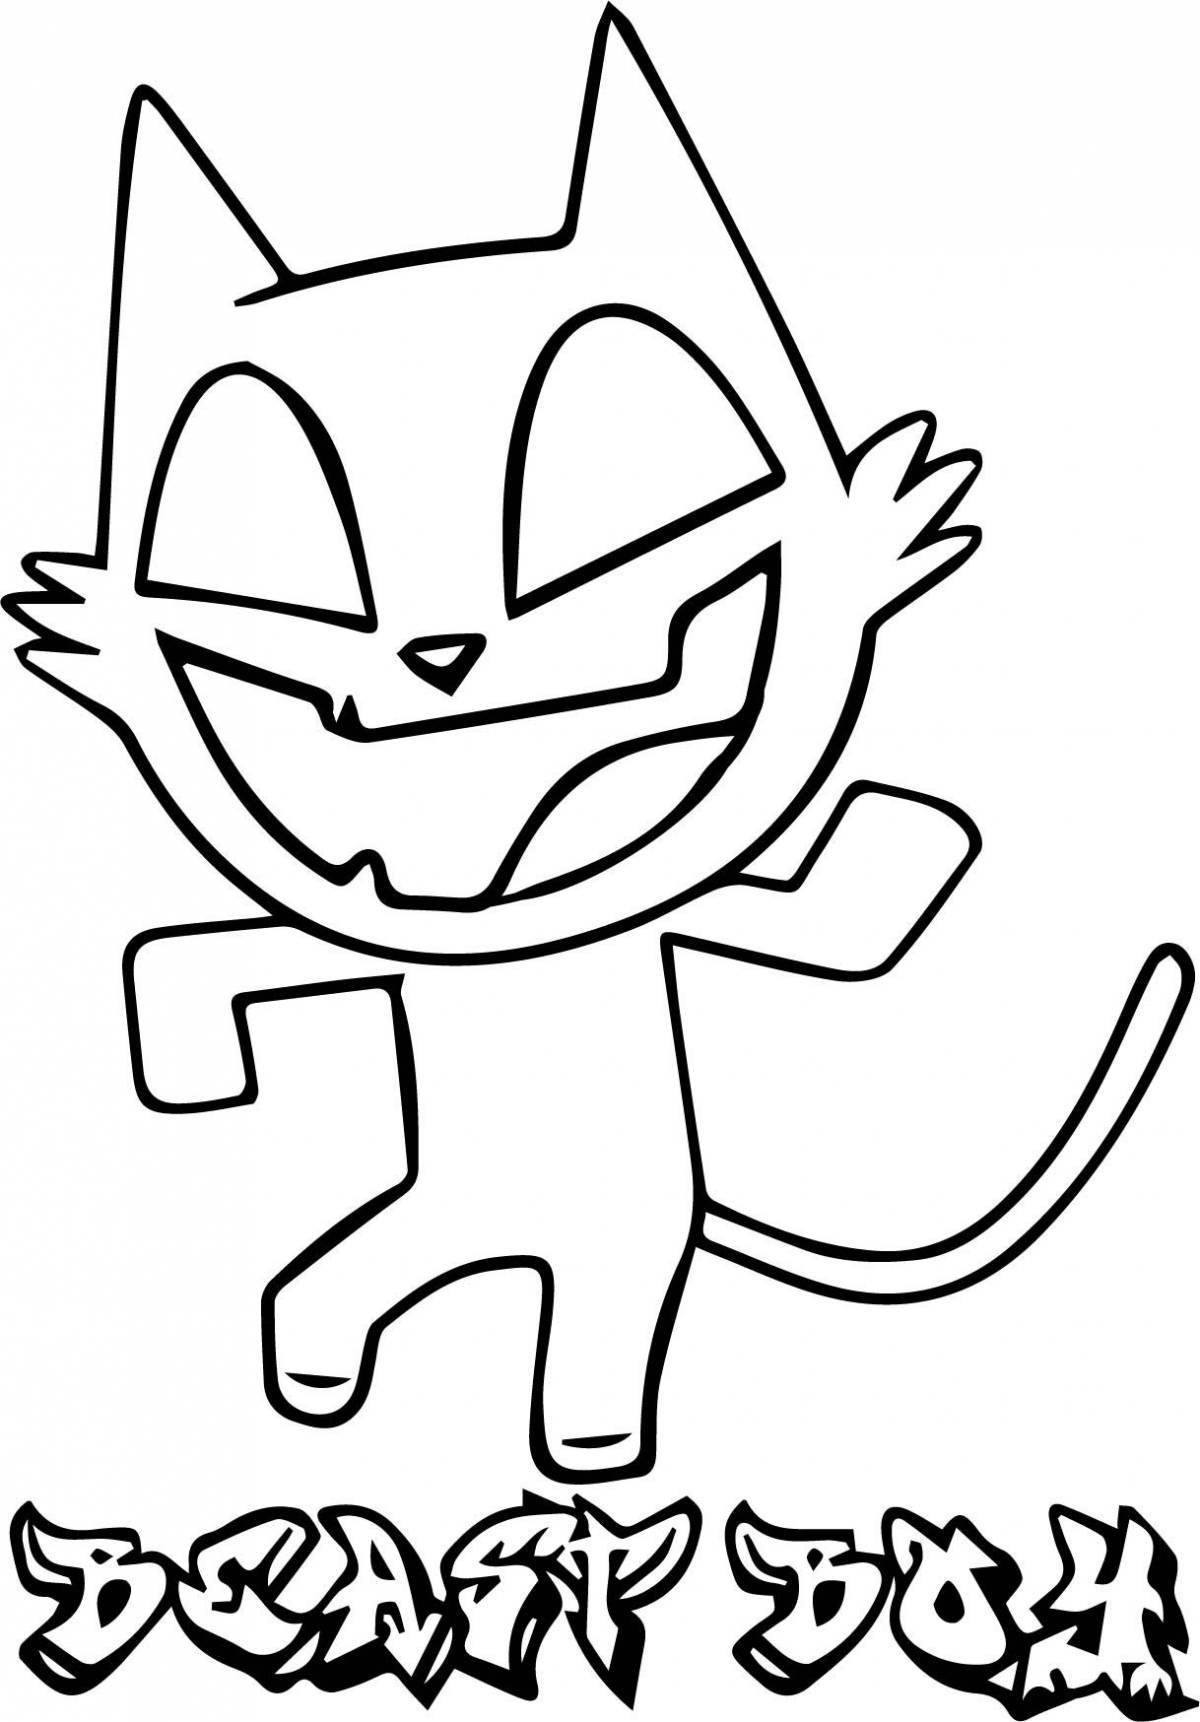 Раскраска яркая кошка кантур